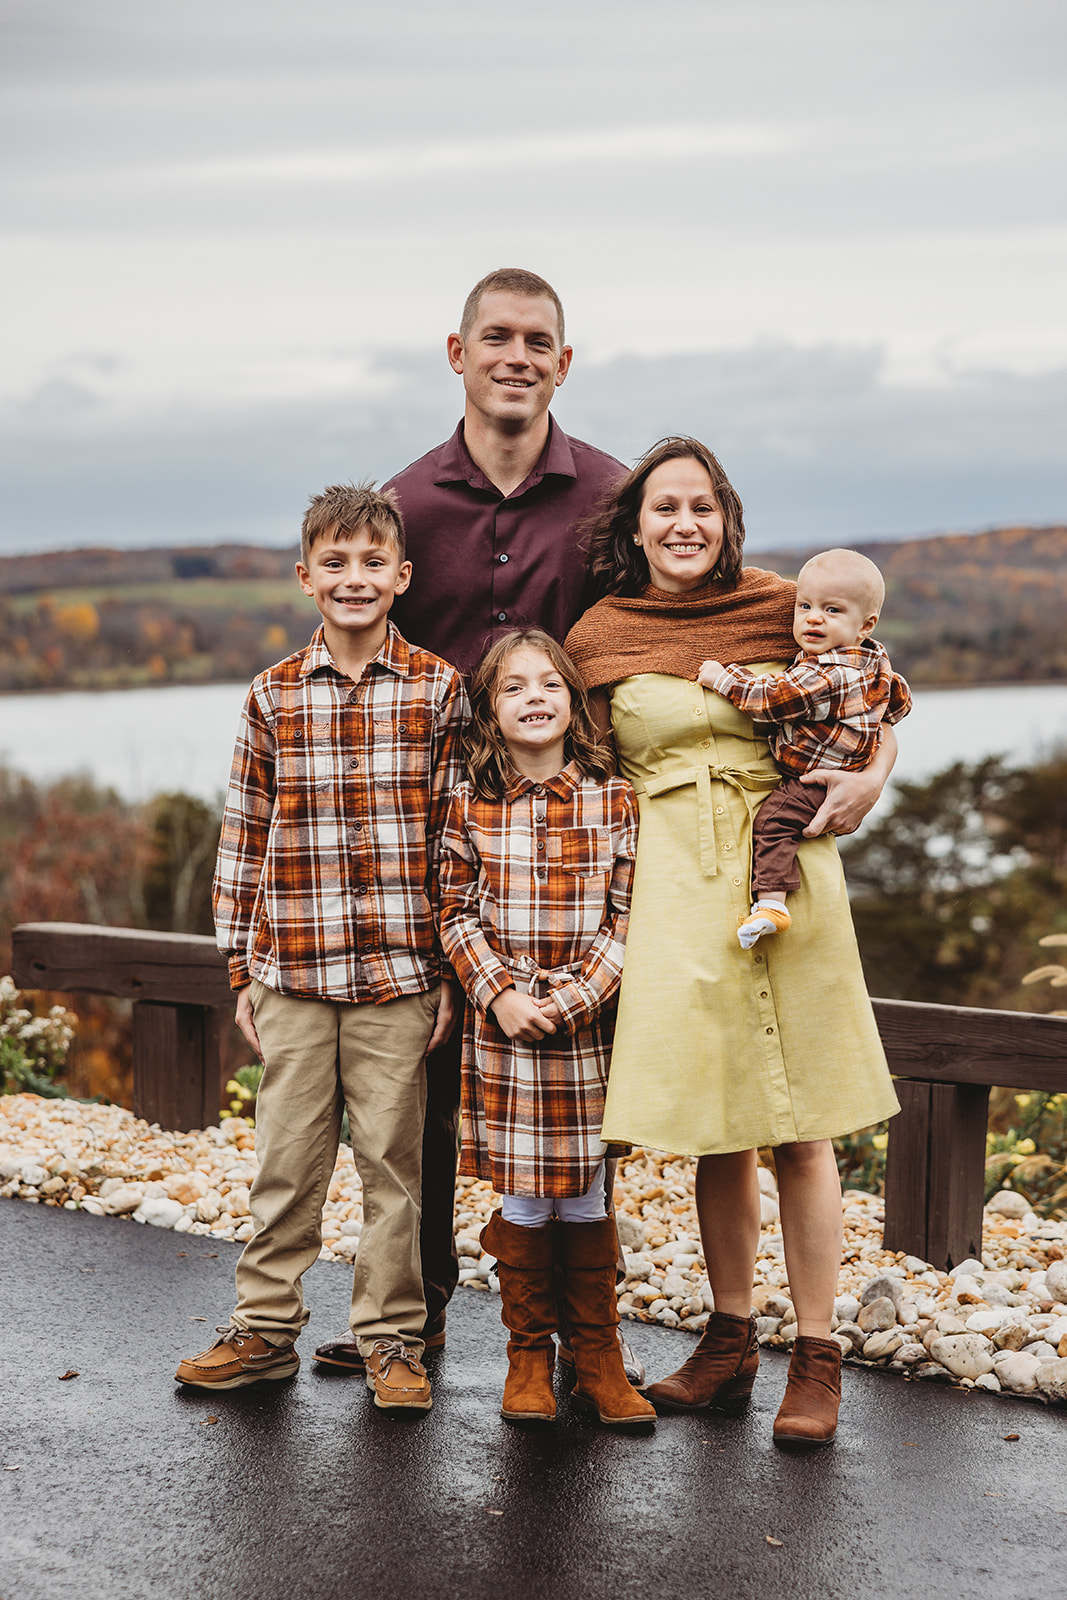 rainy outdoor fall family portrait session photoshoot Blue Marsh Lake Reading Wyomissing Pennsylvania